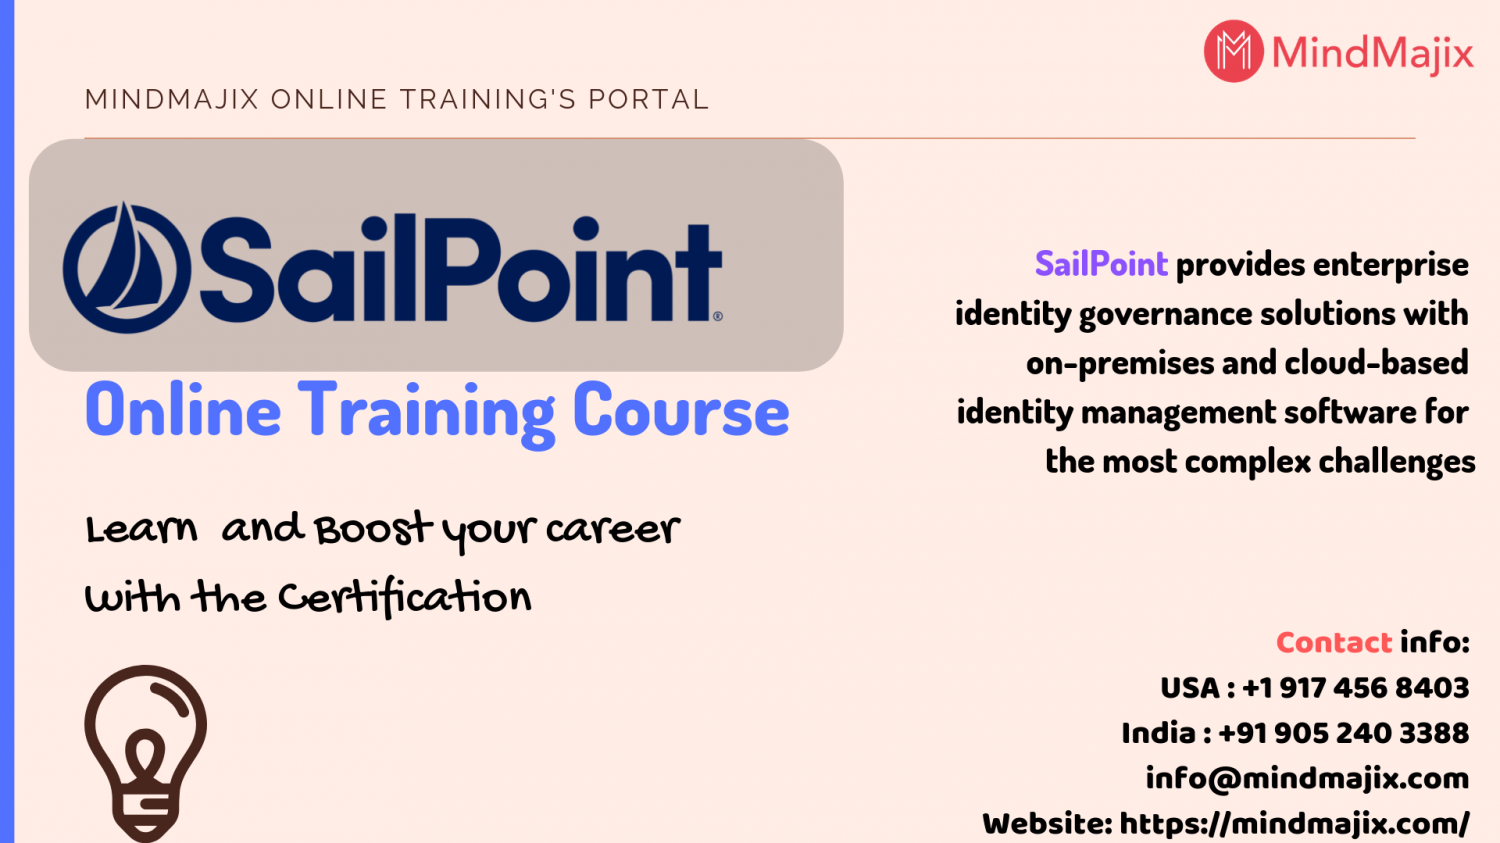 SailPoint Online Training Course- Mindmajix Infographic